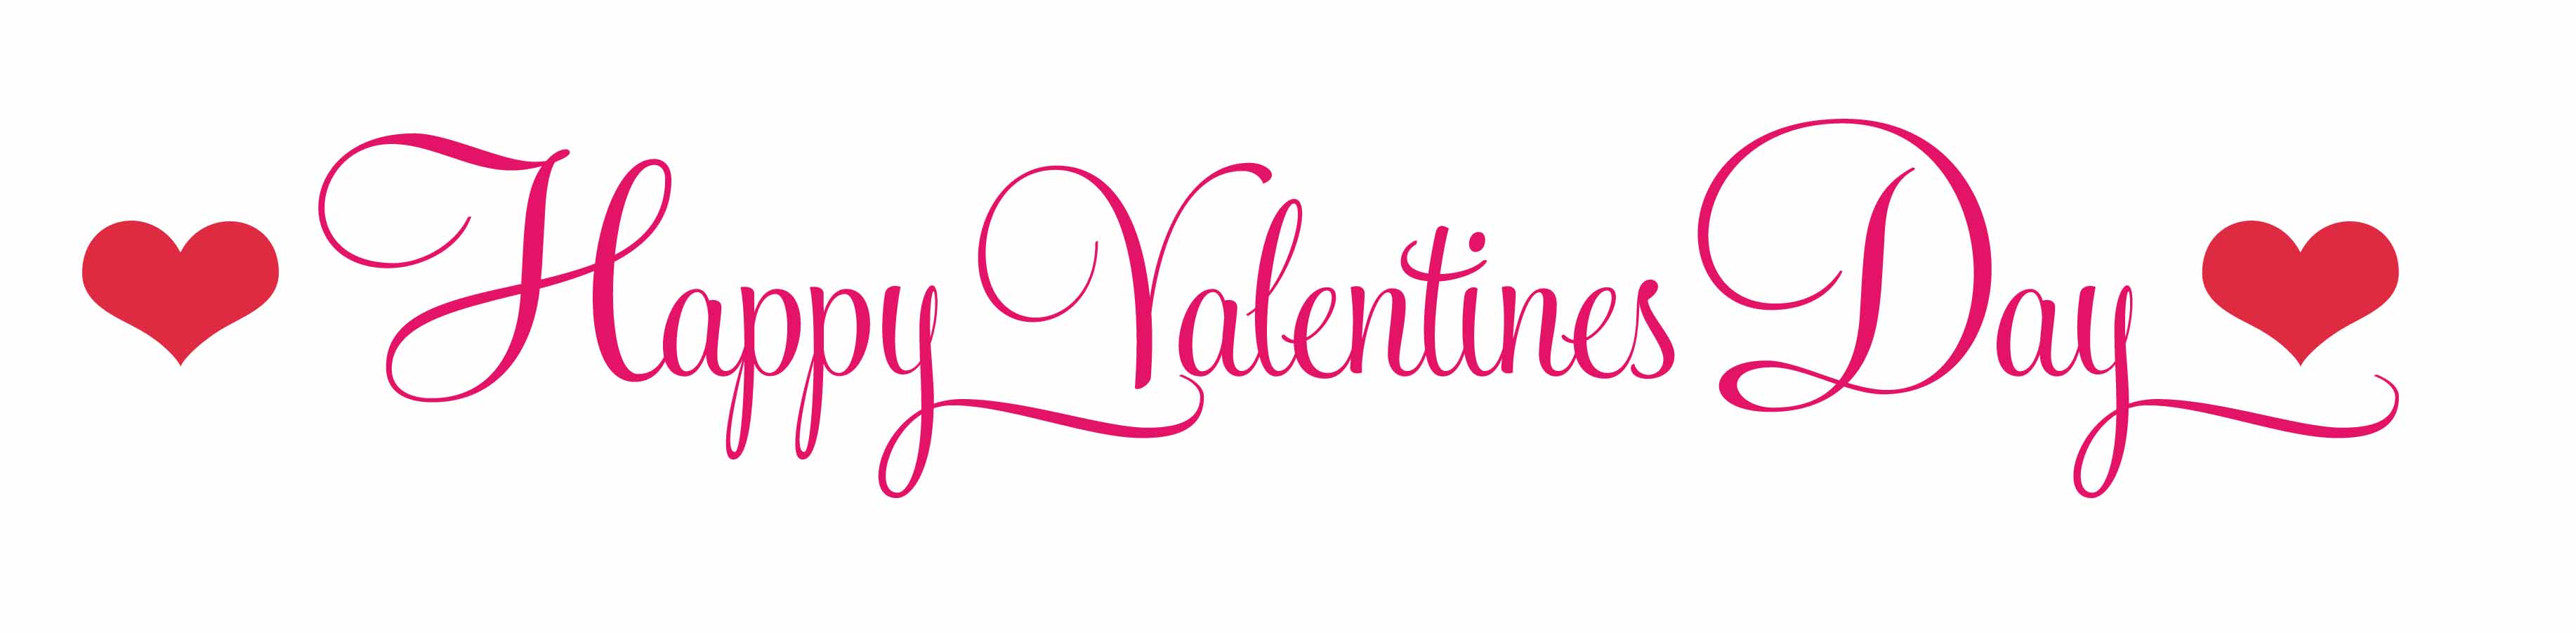 Valentines Day Decor   More       My Blog